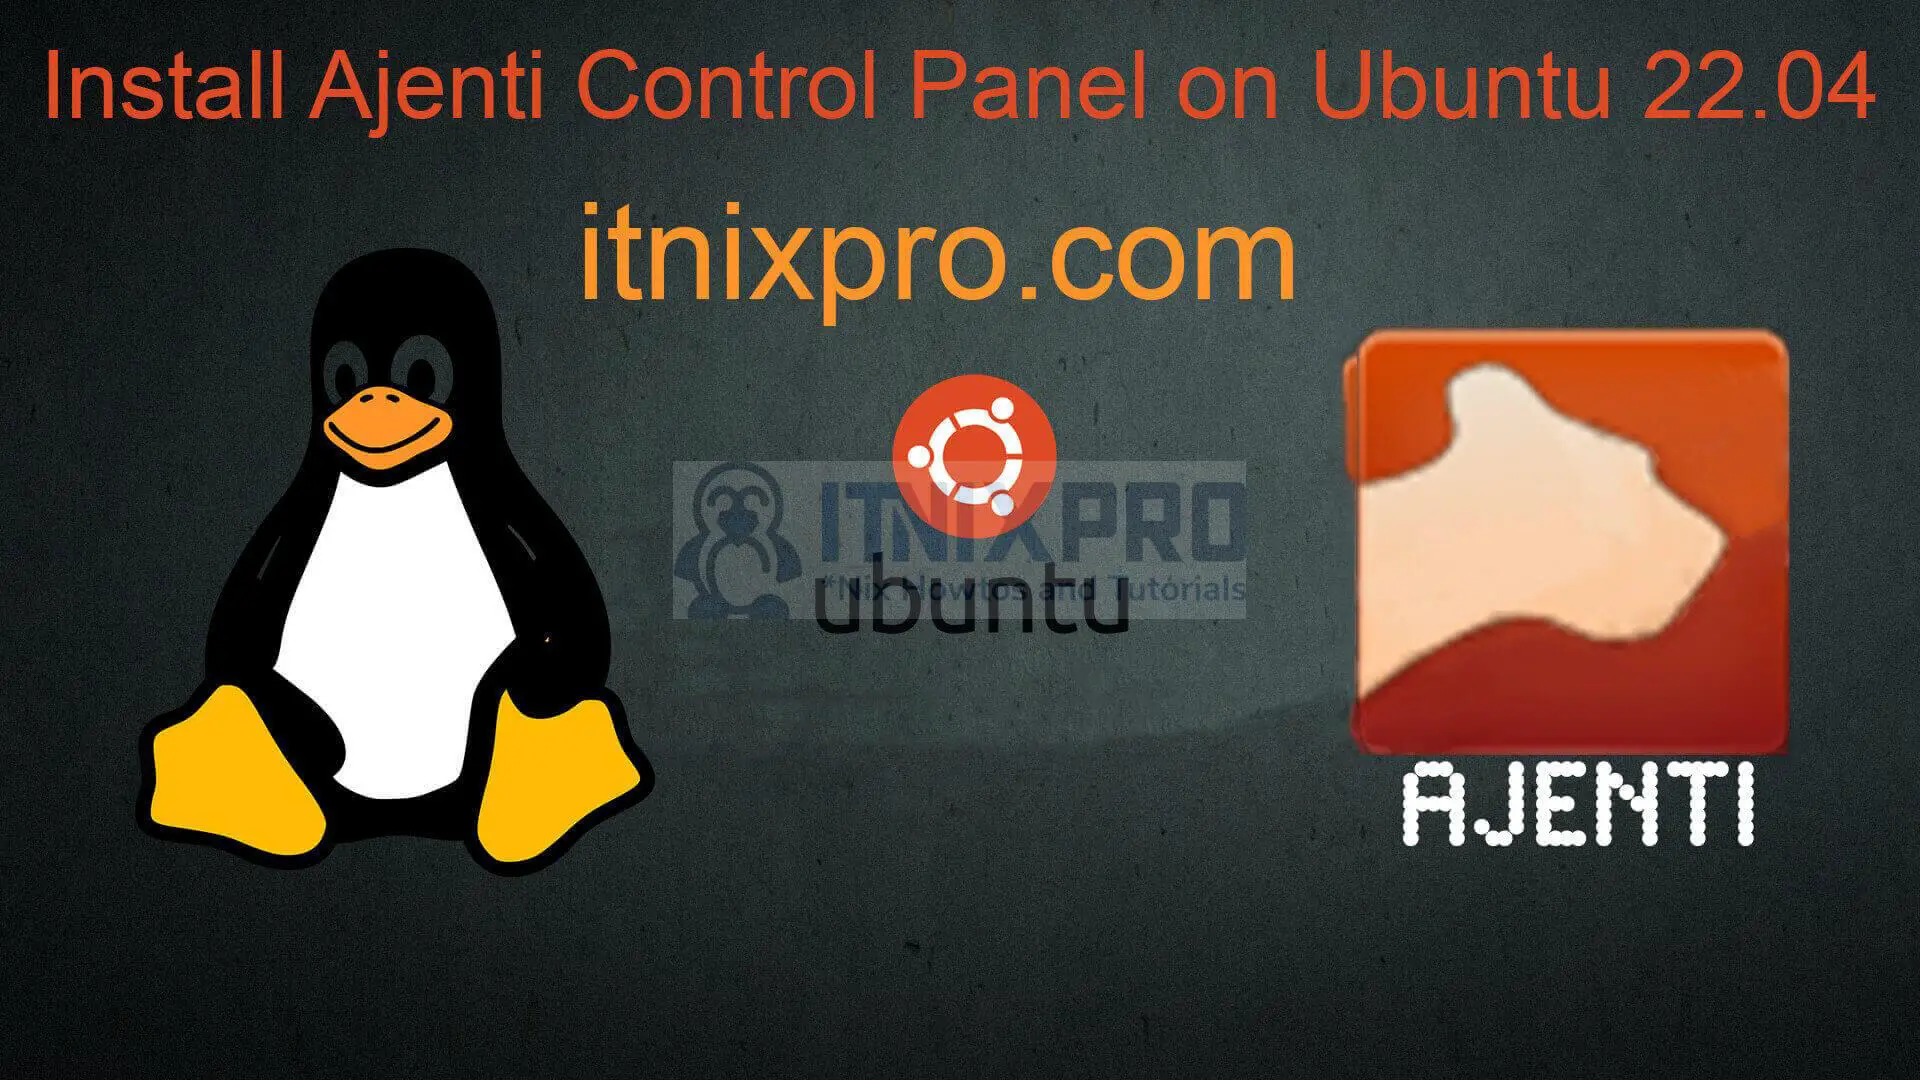 Install Ajenti Control Panel on Ubuntu 22.04